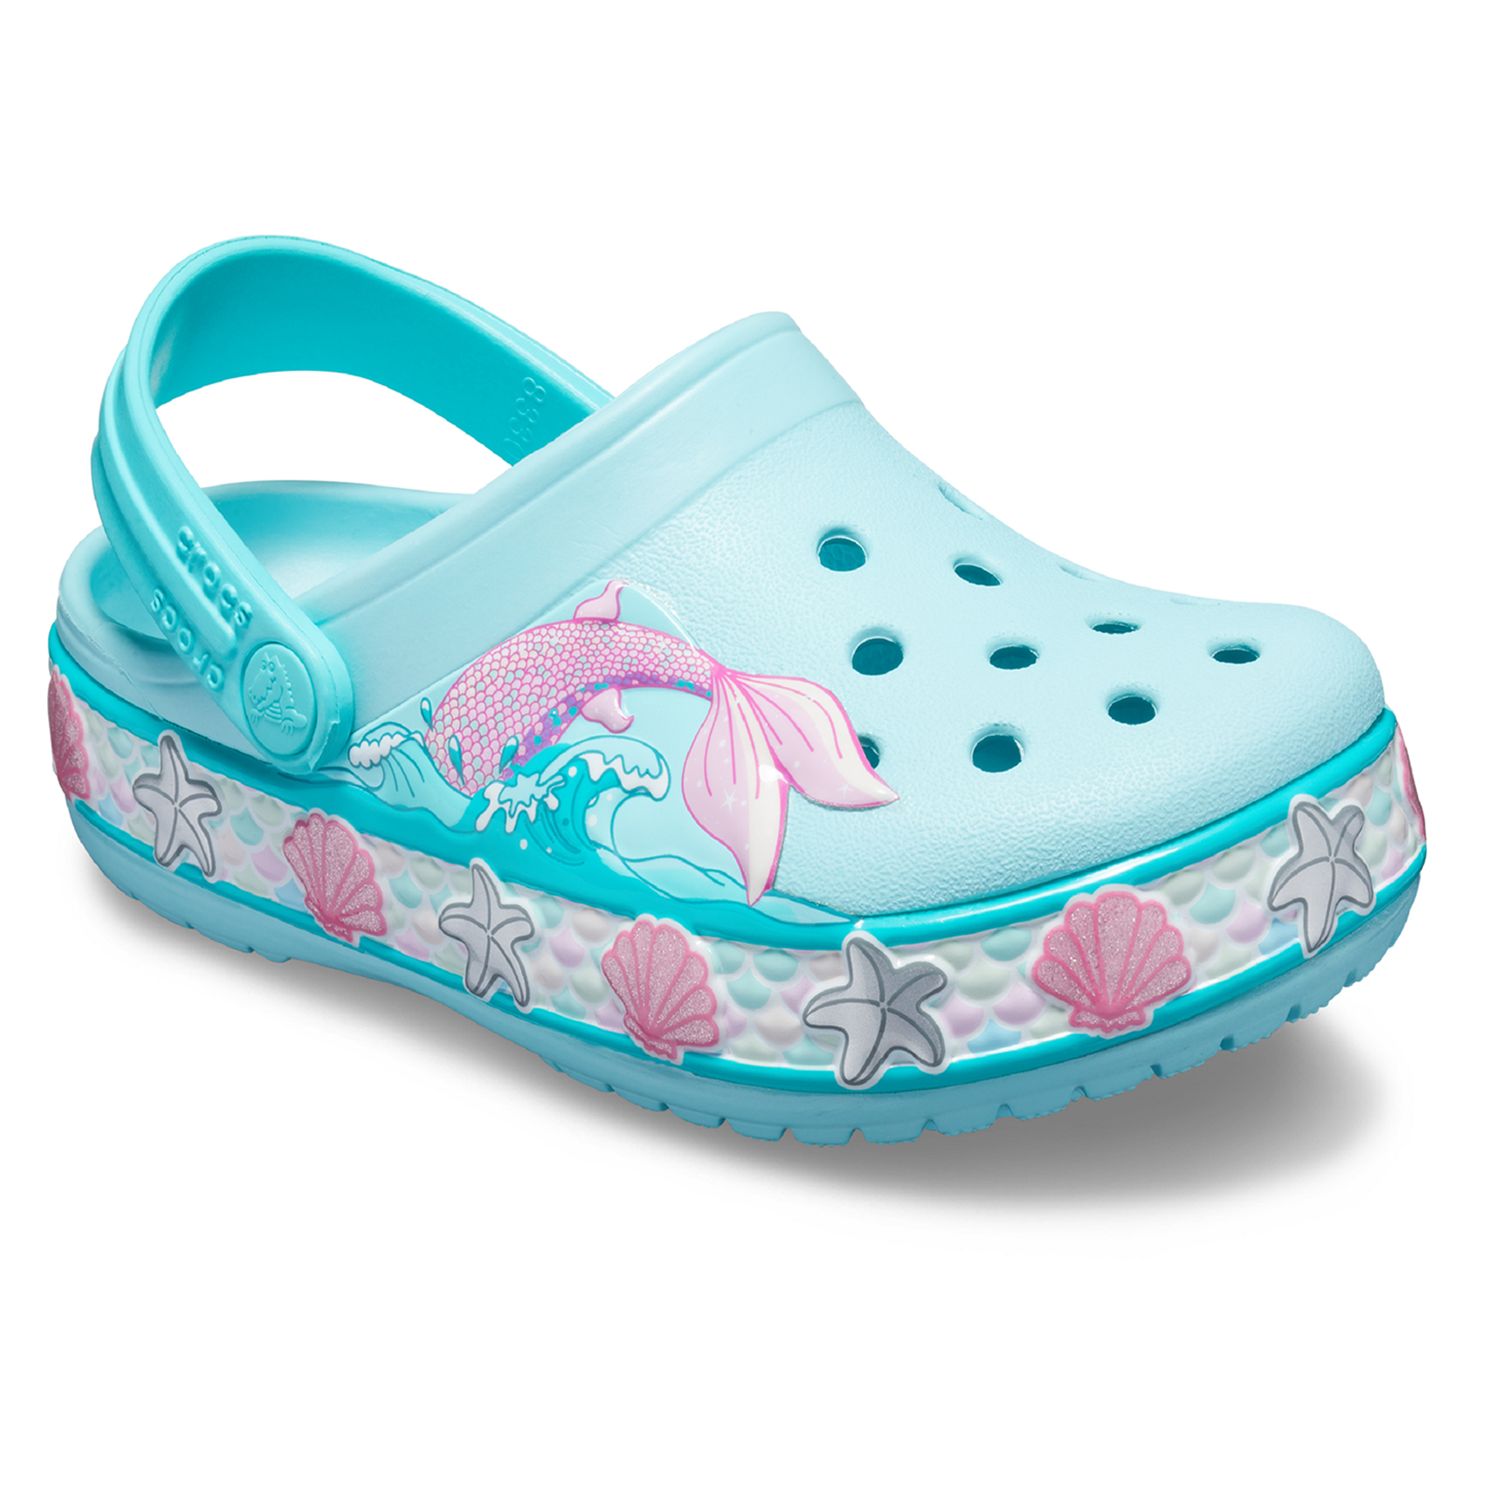 Crocs Mermaid Girls' Clogs